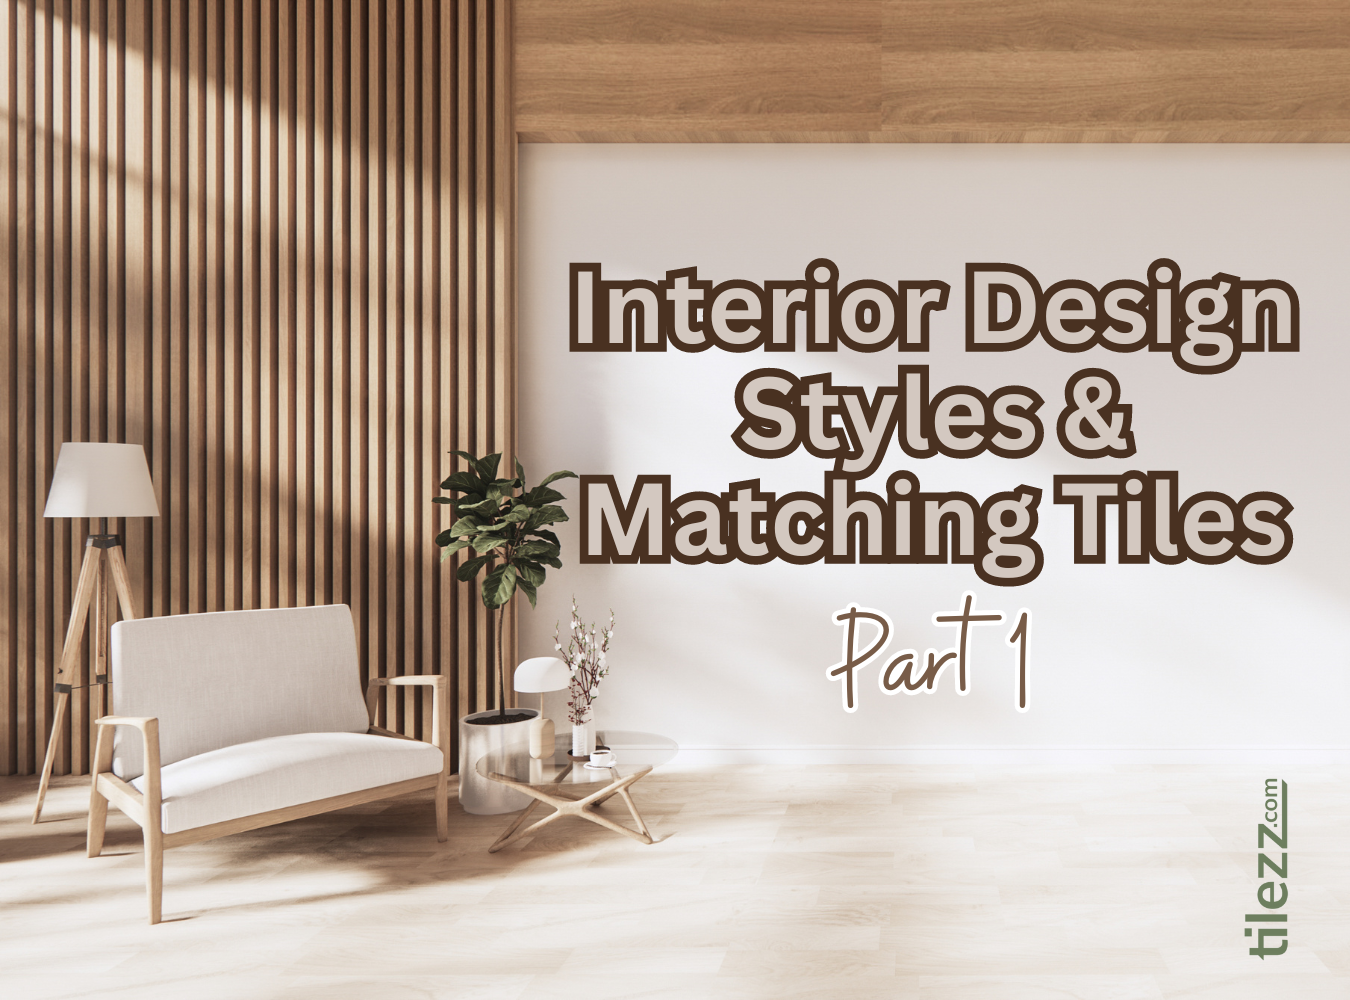 Interior Design Styles & Matching Tiles (Part 1)